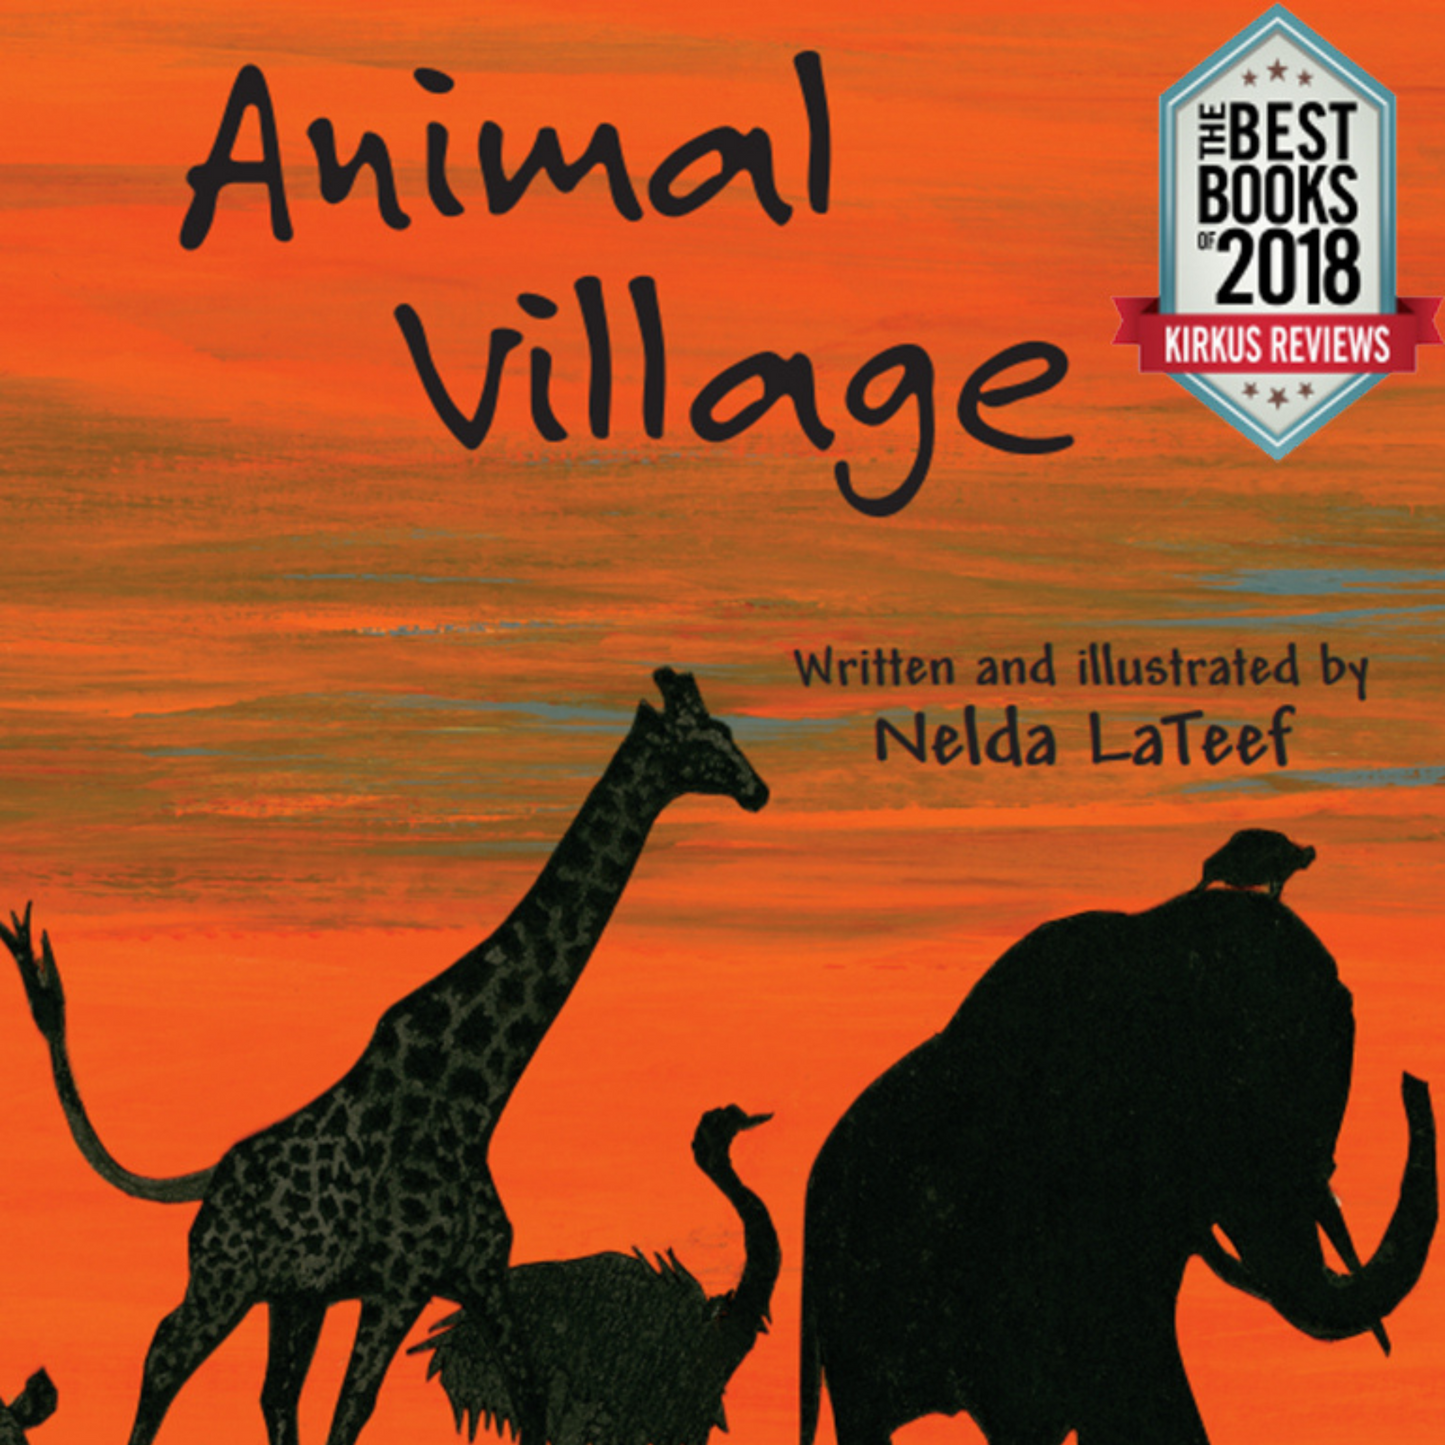 Animal Village